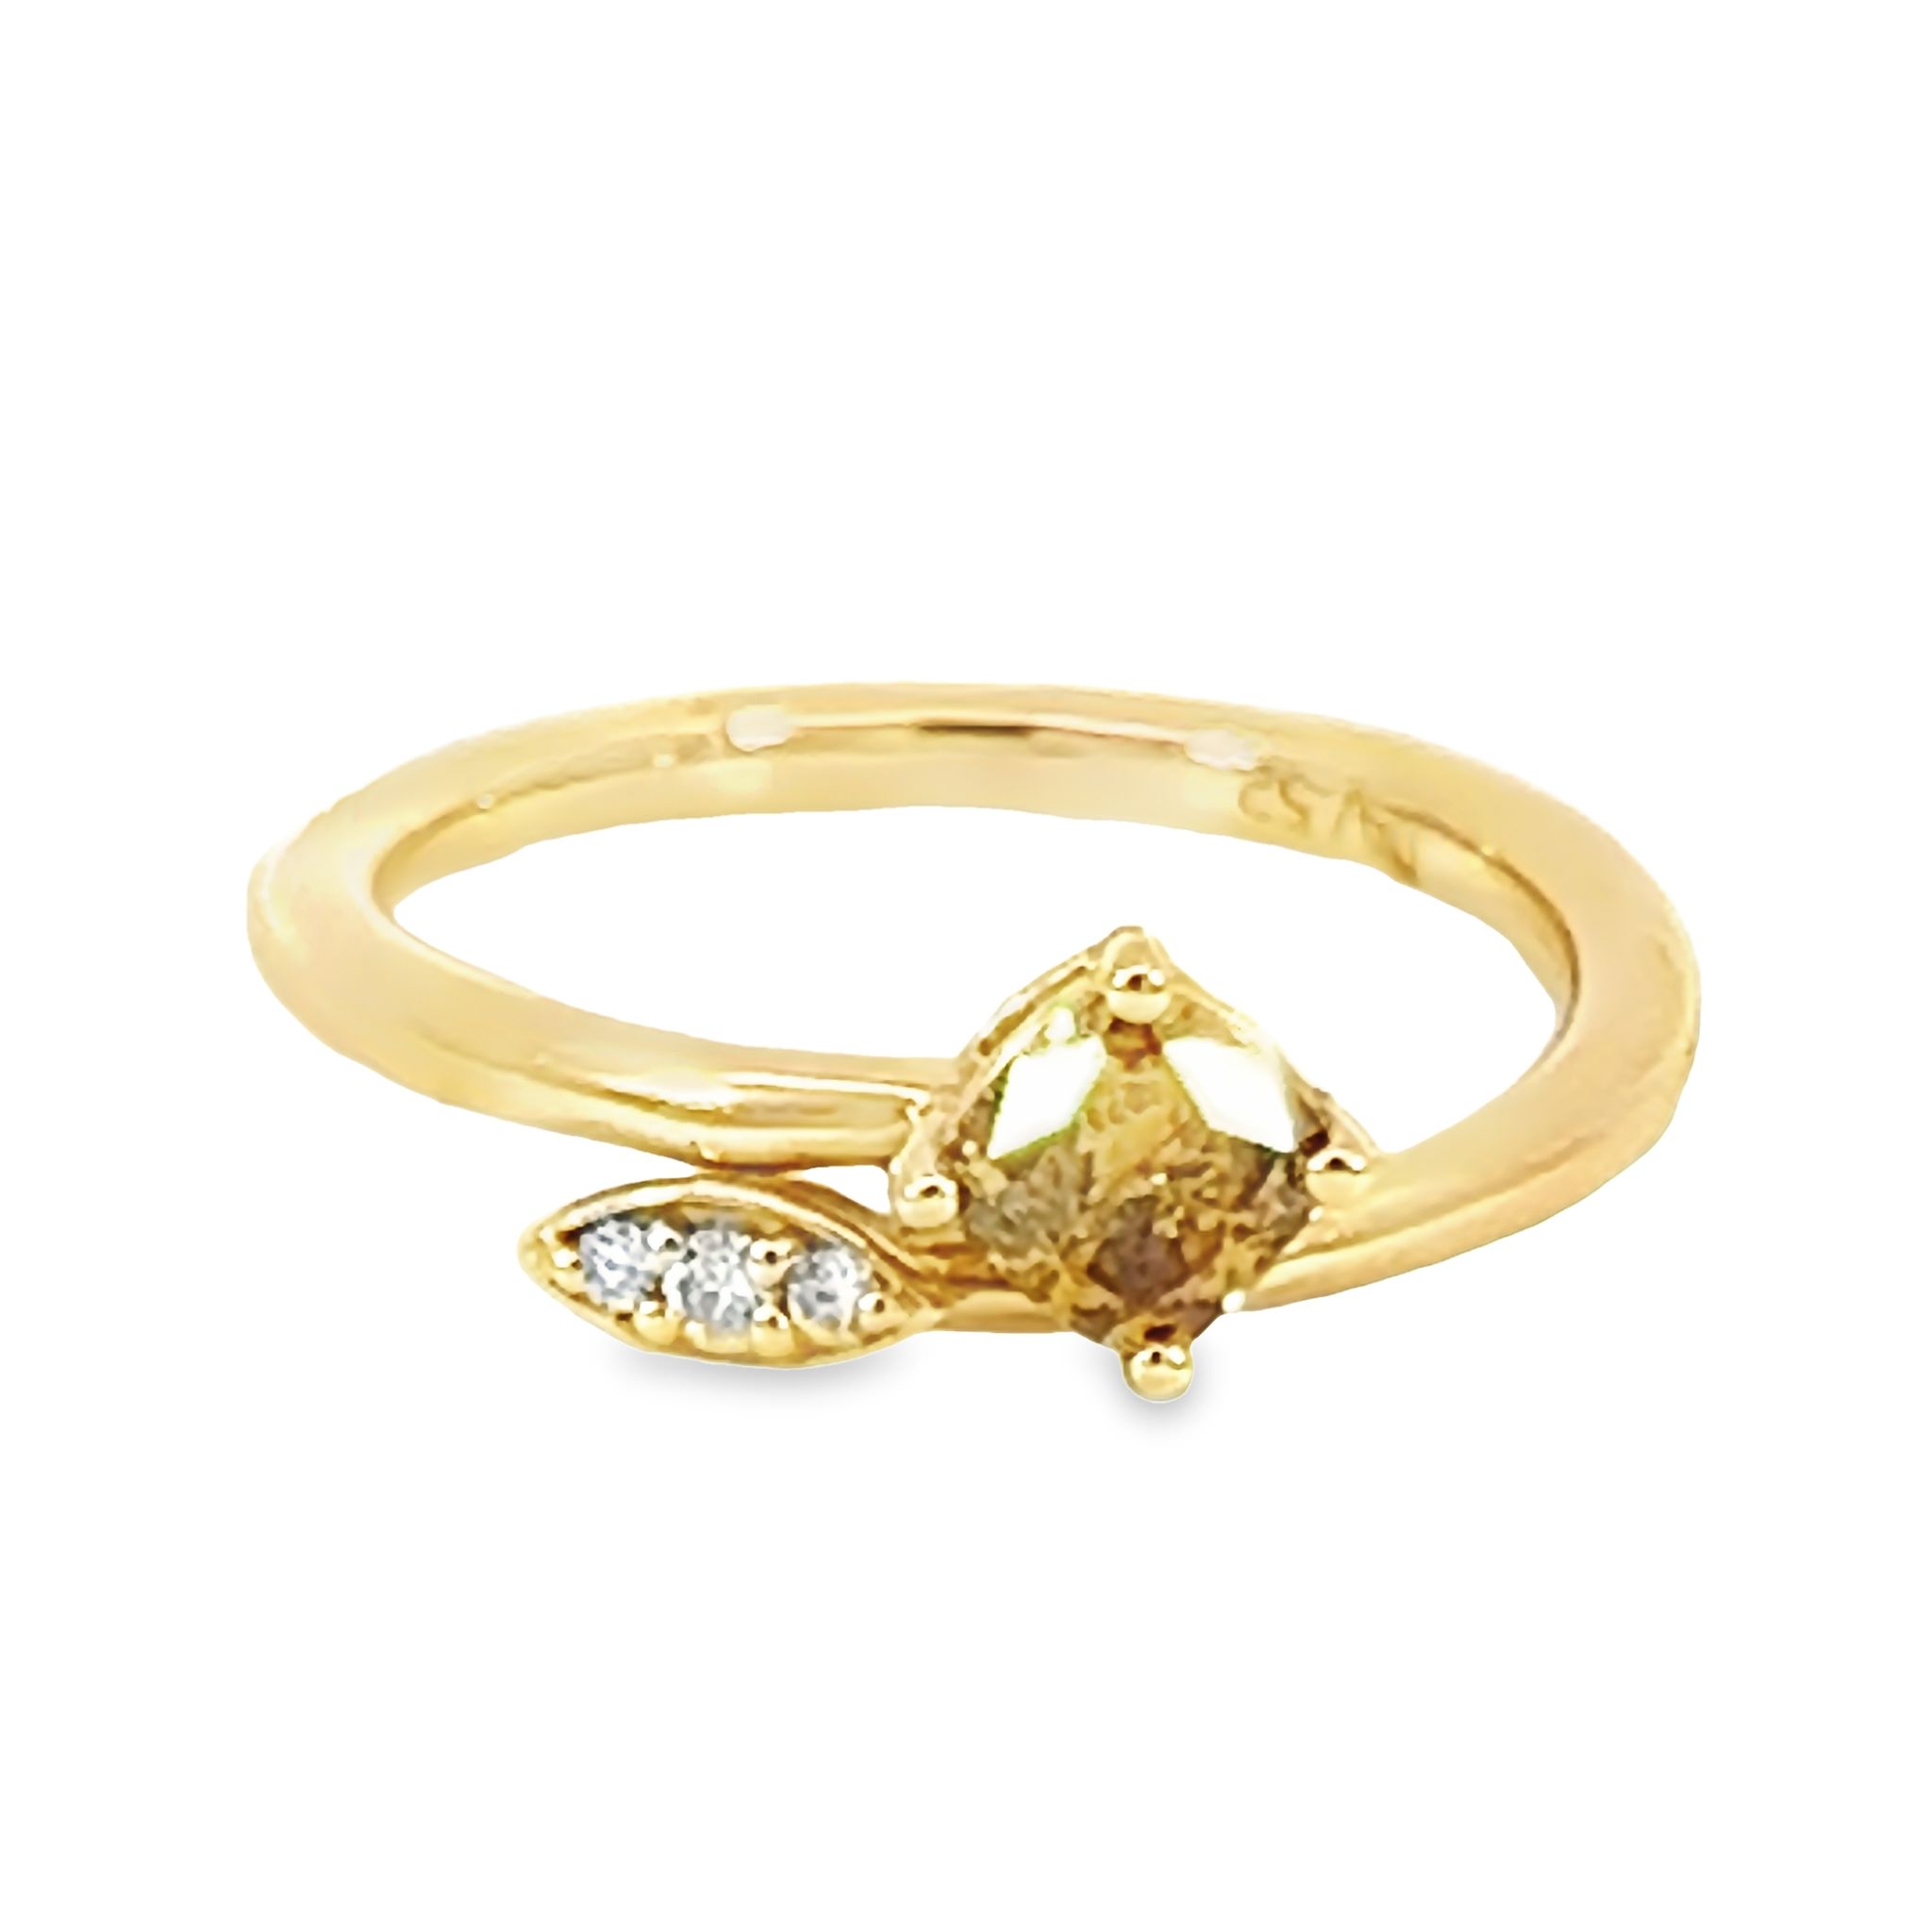 14k Yellow Gold Fancy Diamond Ring